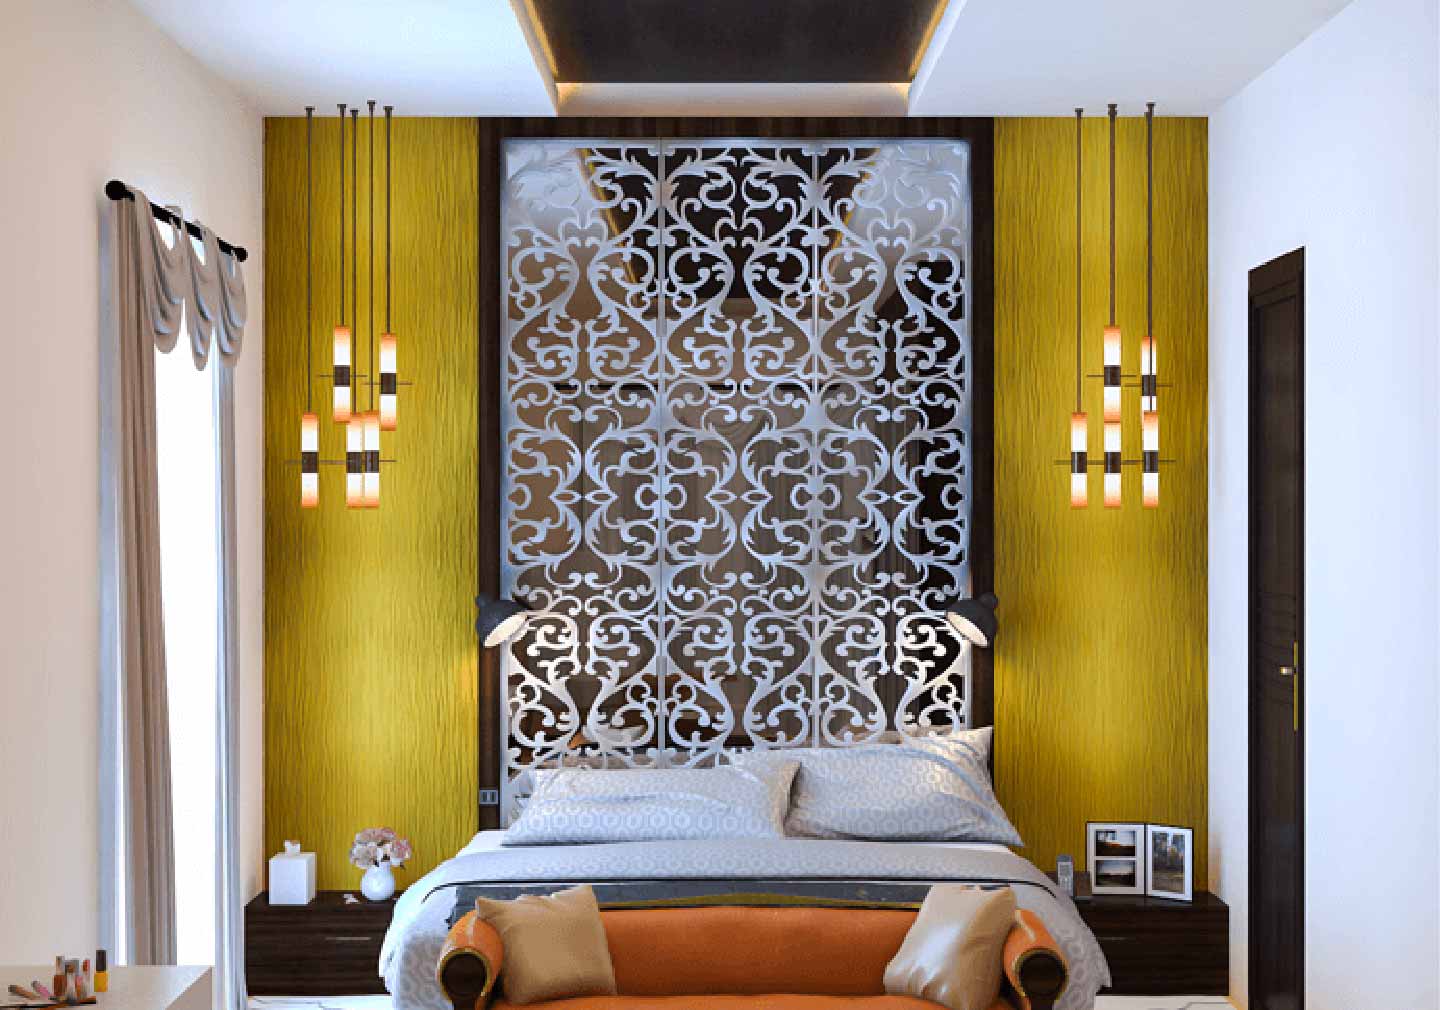 Headboard to Ceiling - Bedroom Interior Design